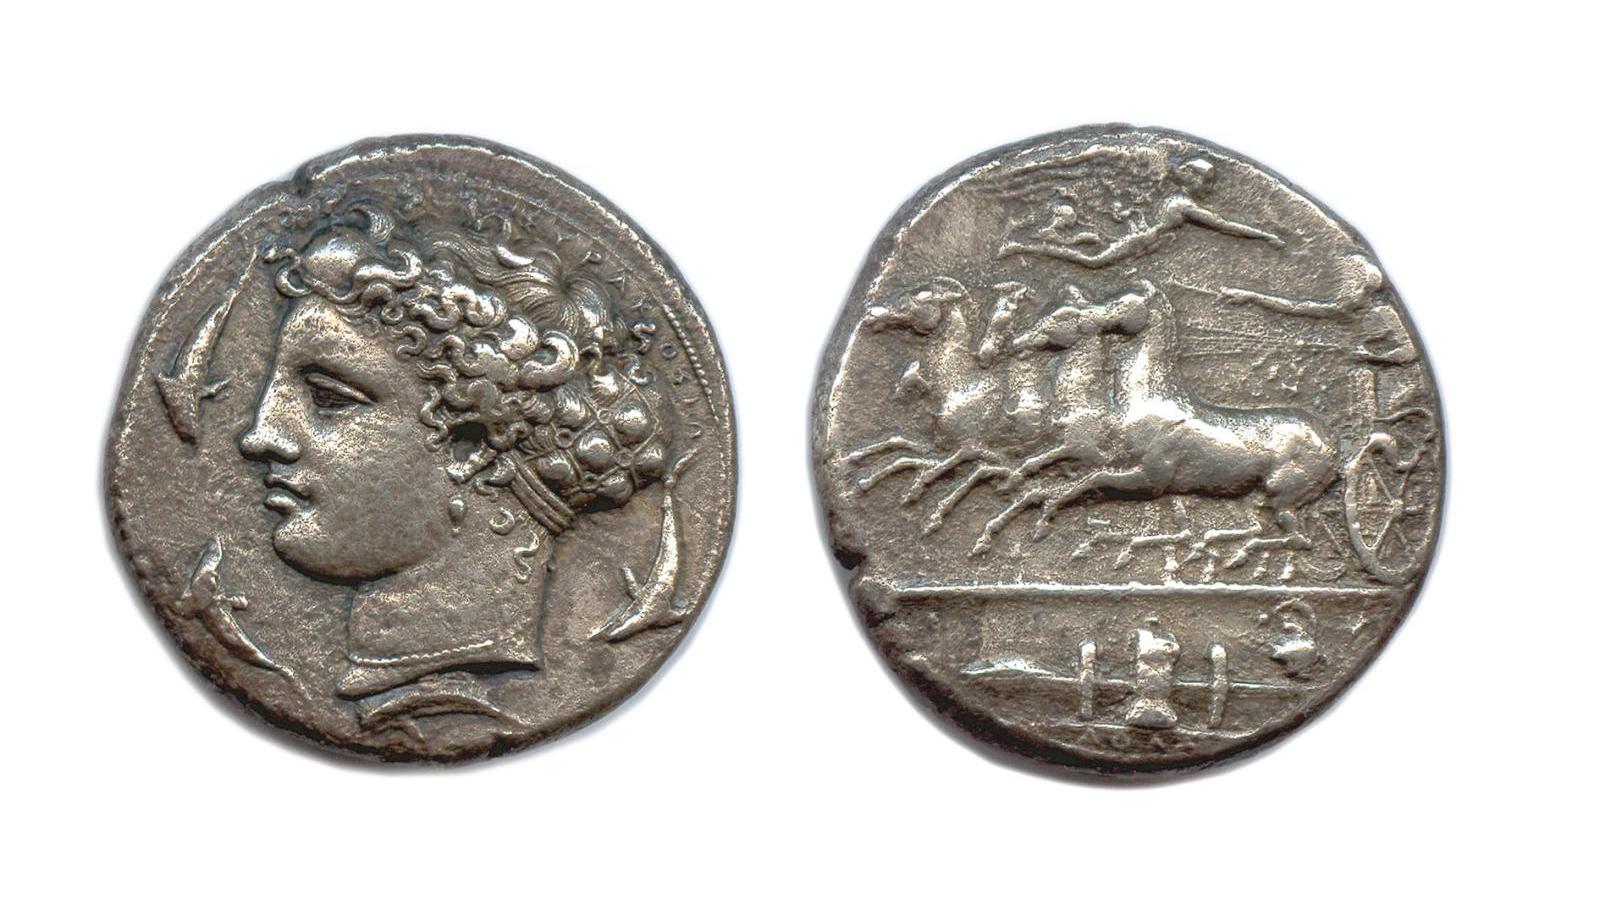   Monnaie antique